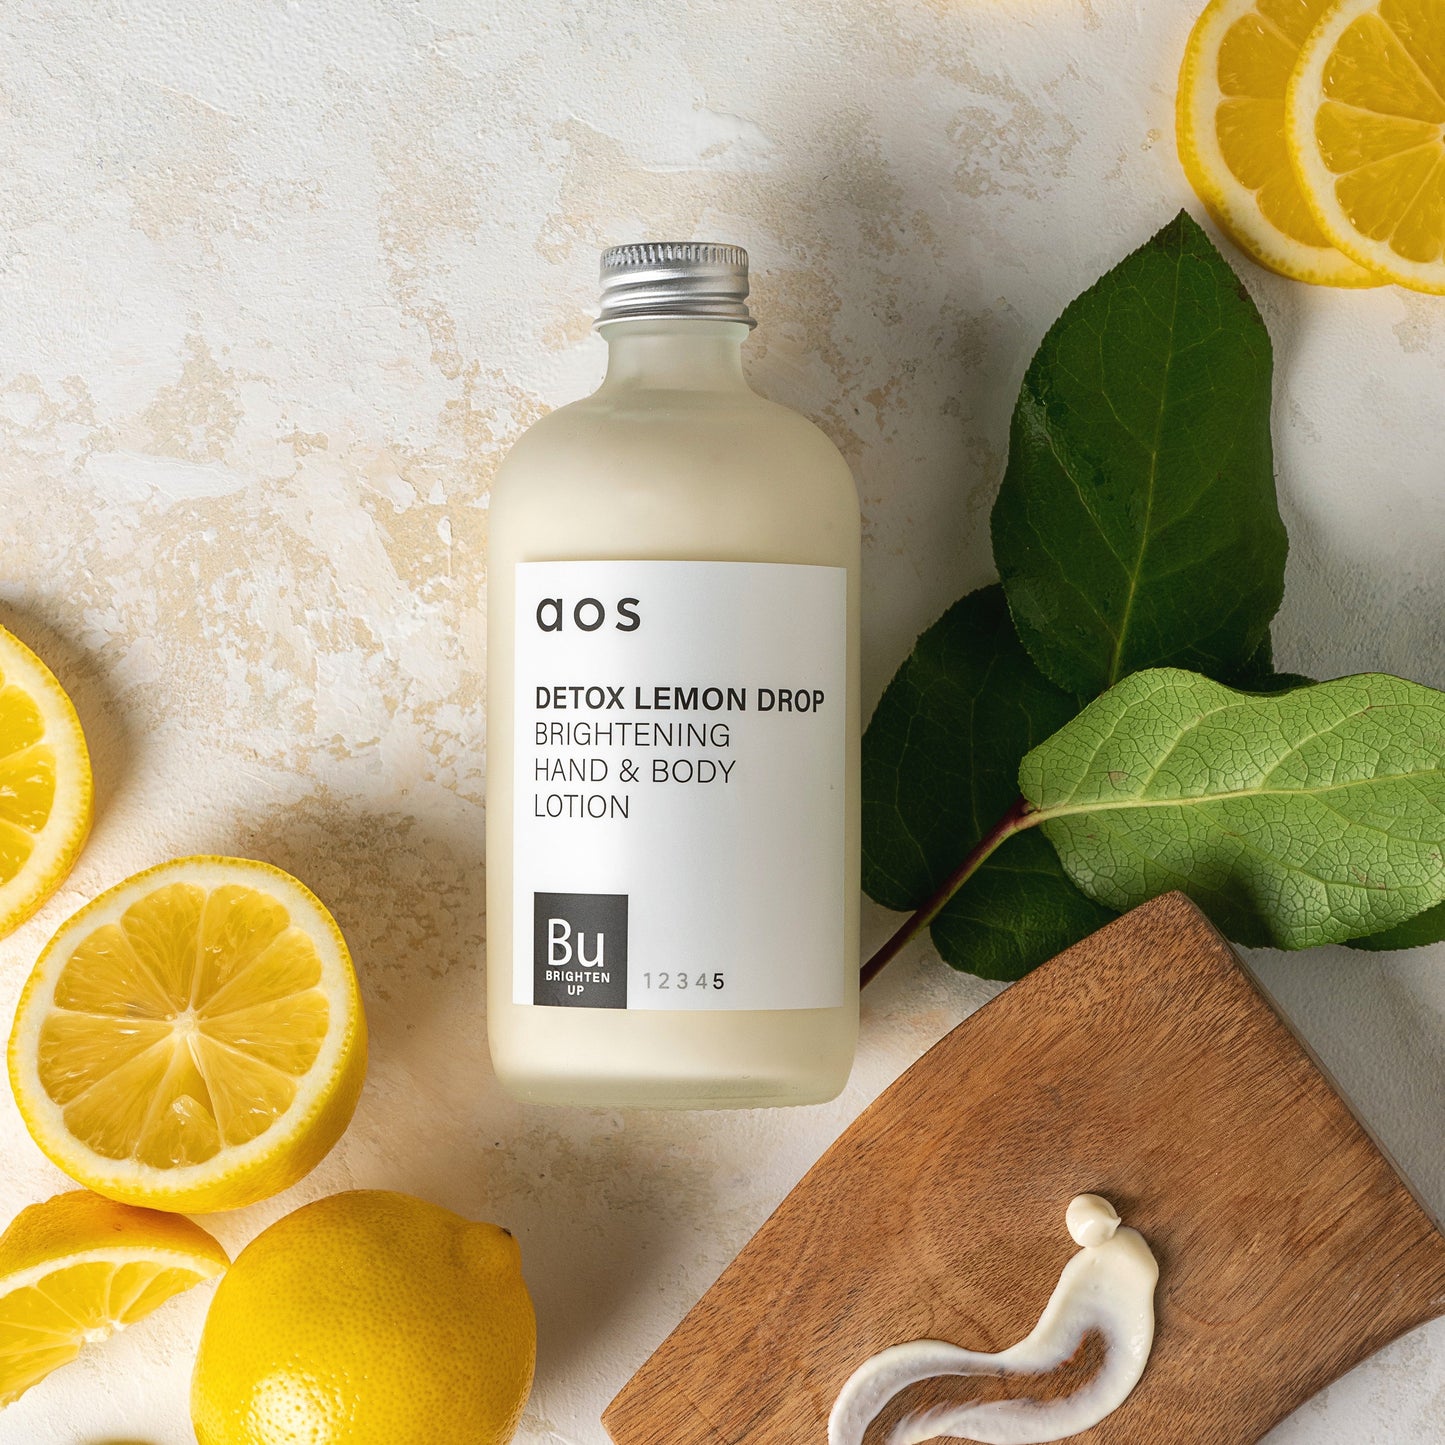 Detox Lemon Drop Brightening Hand & Body Lotion